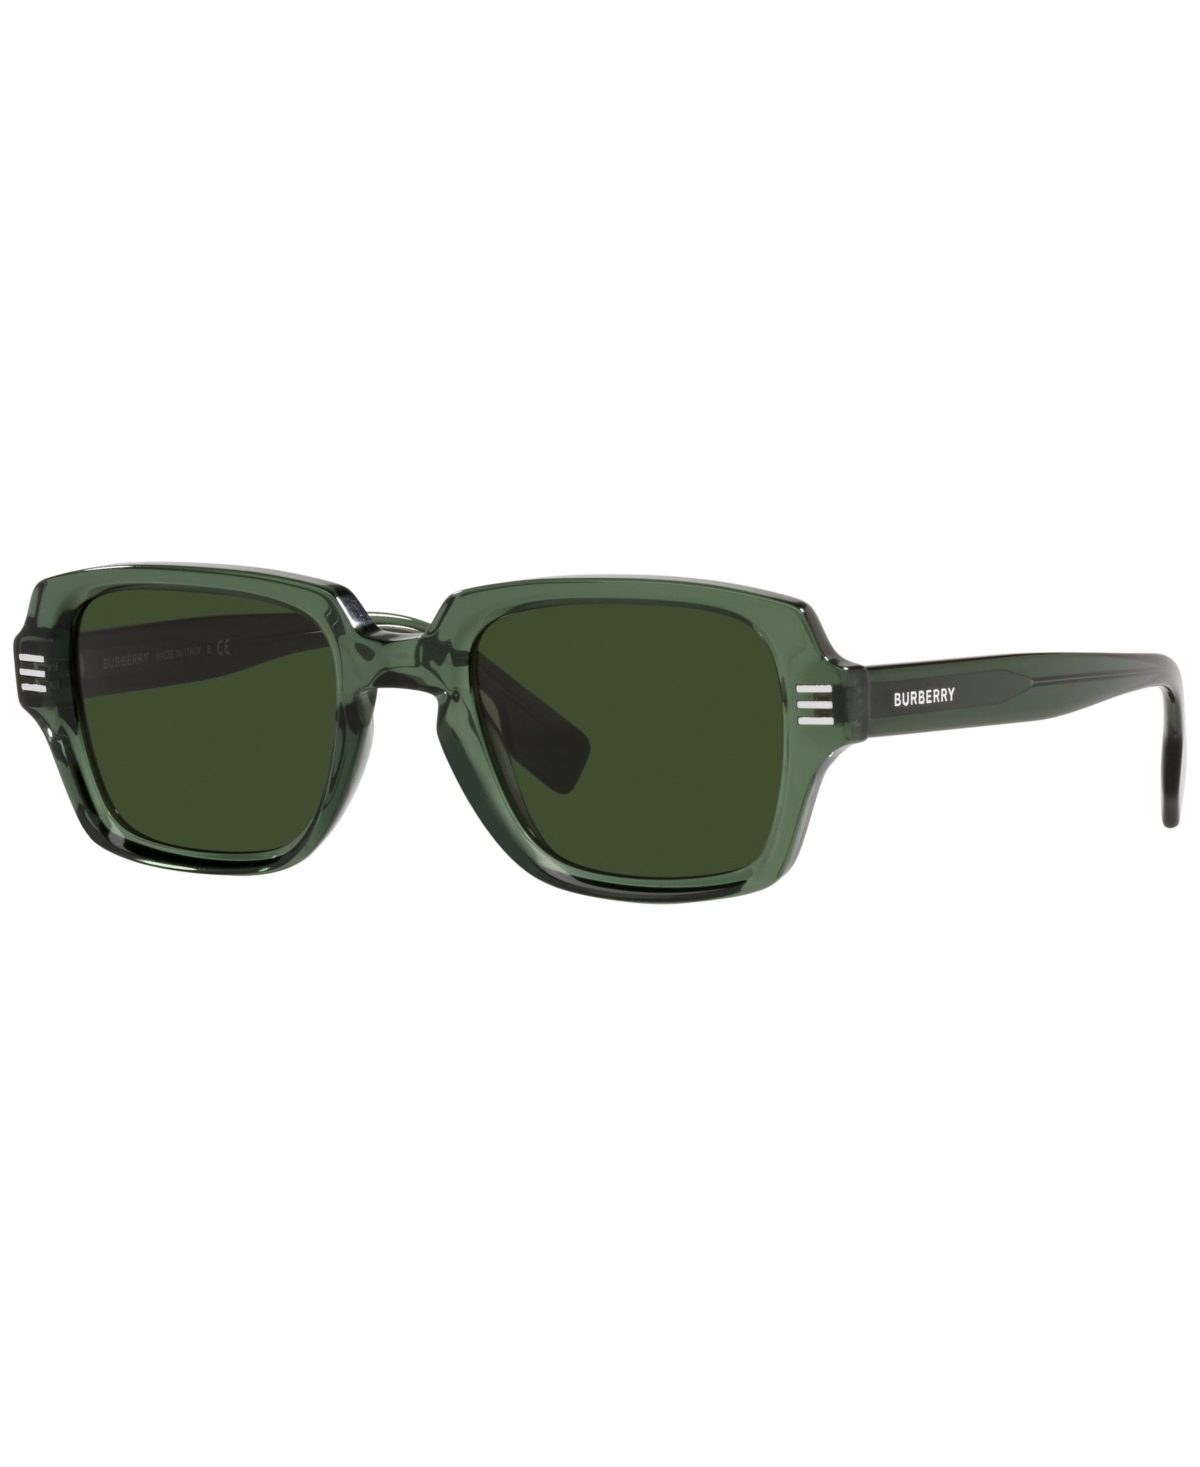 Men's Sunglasses, BE4349 - Green